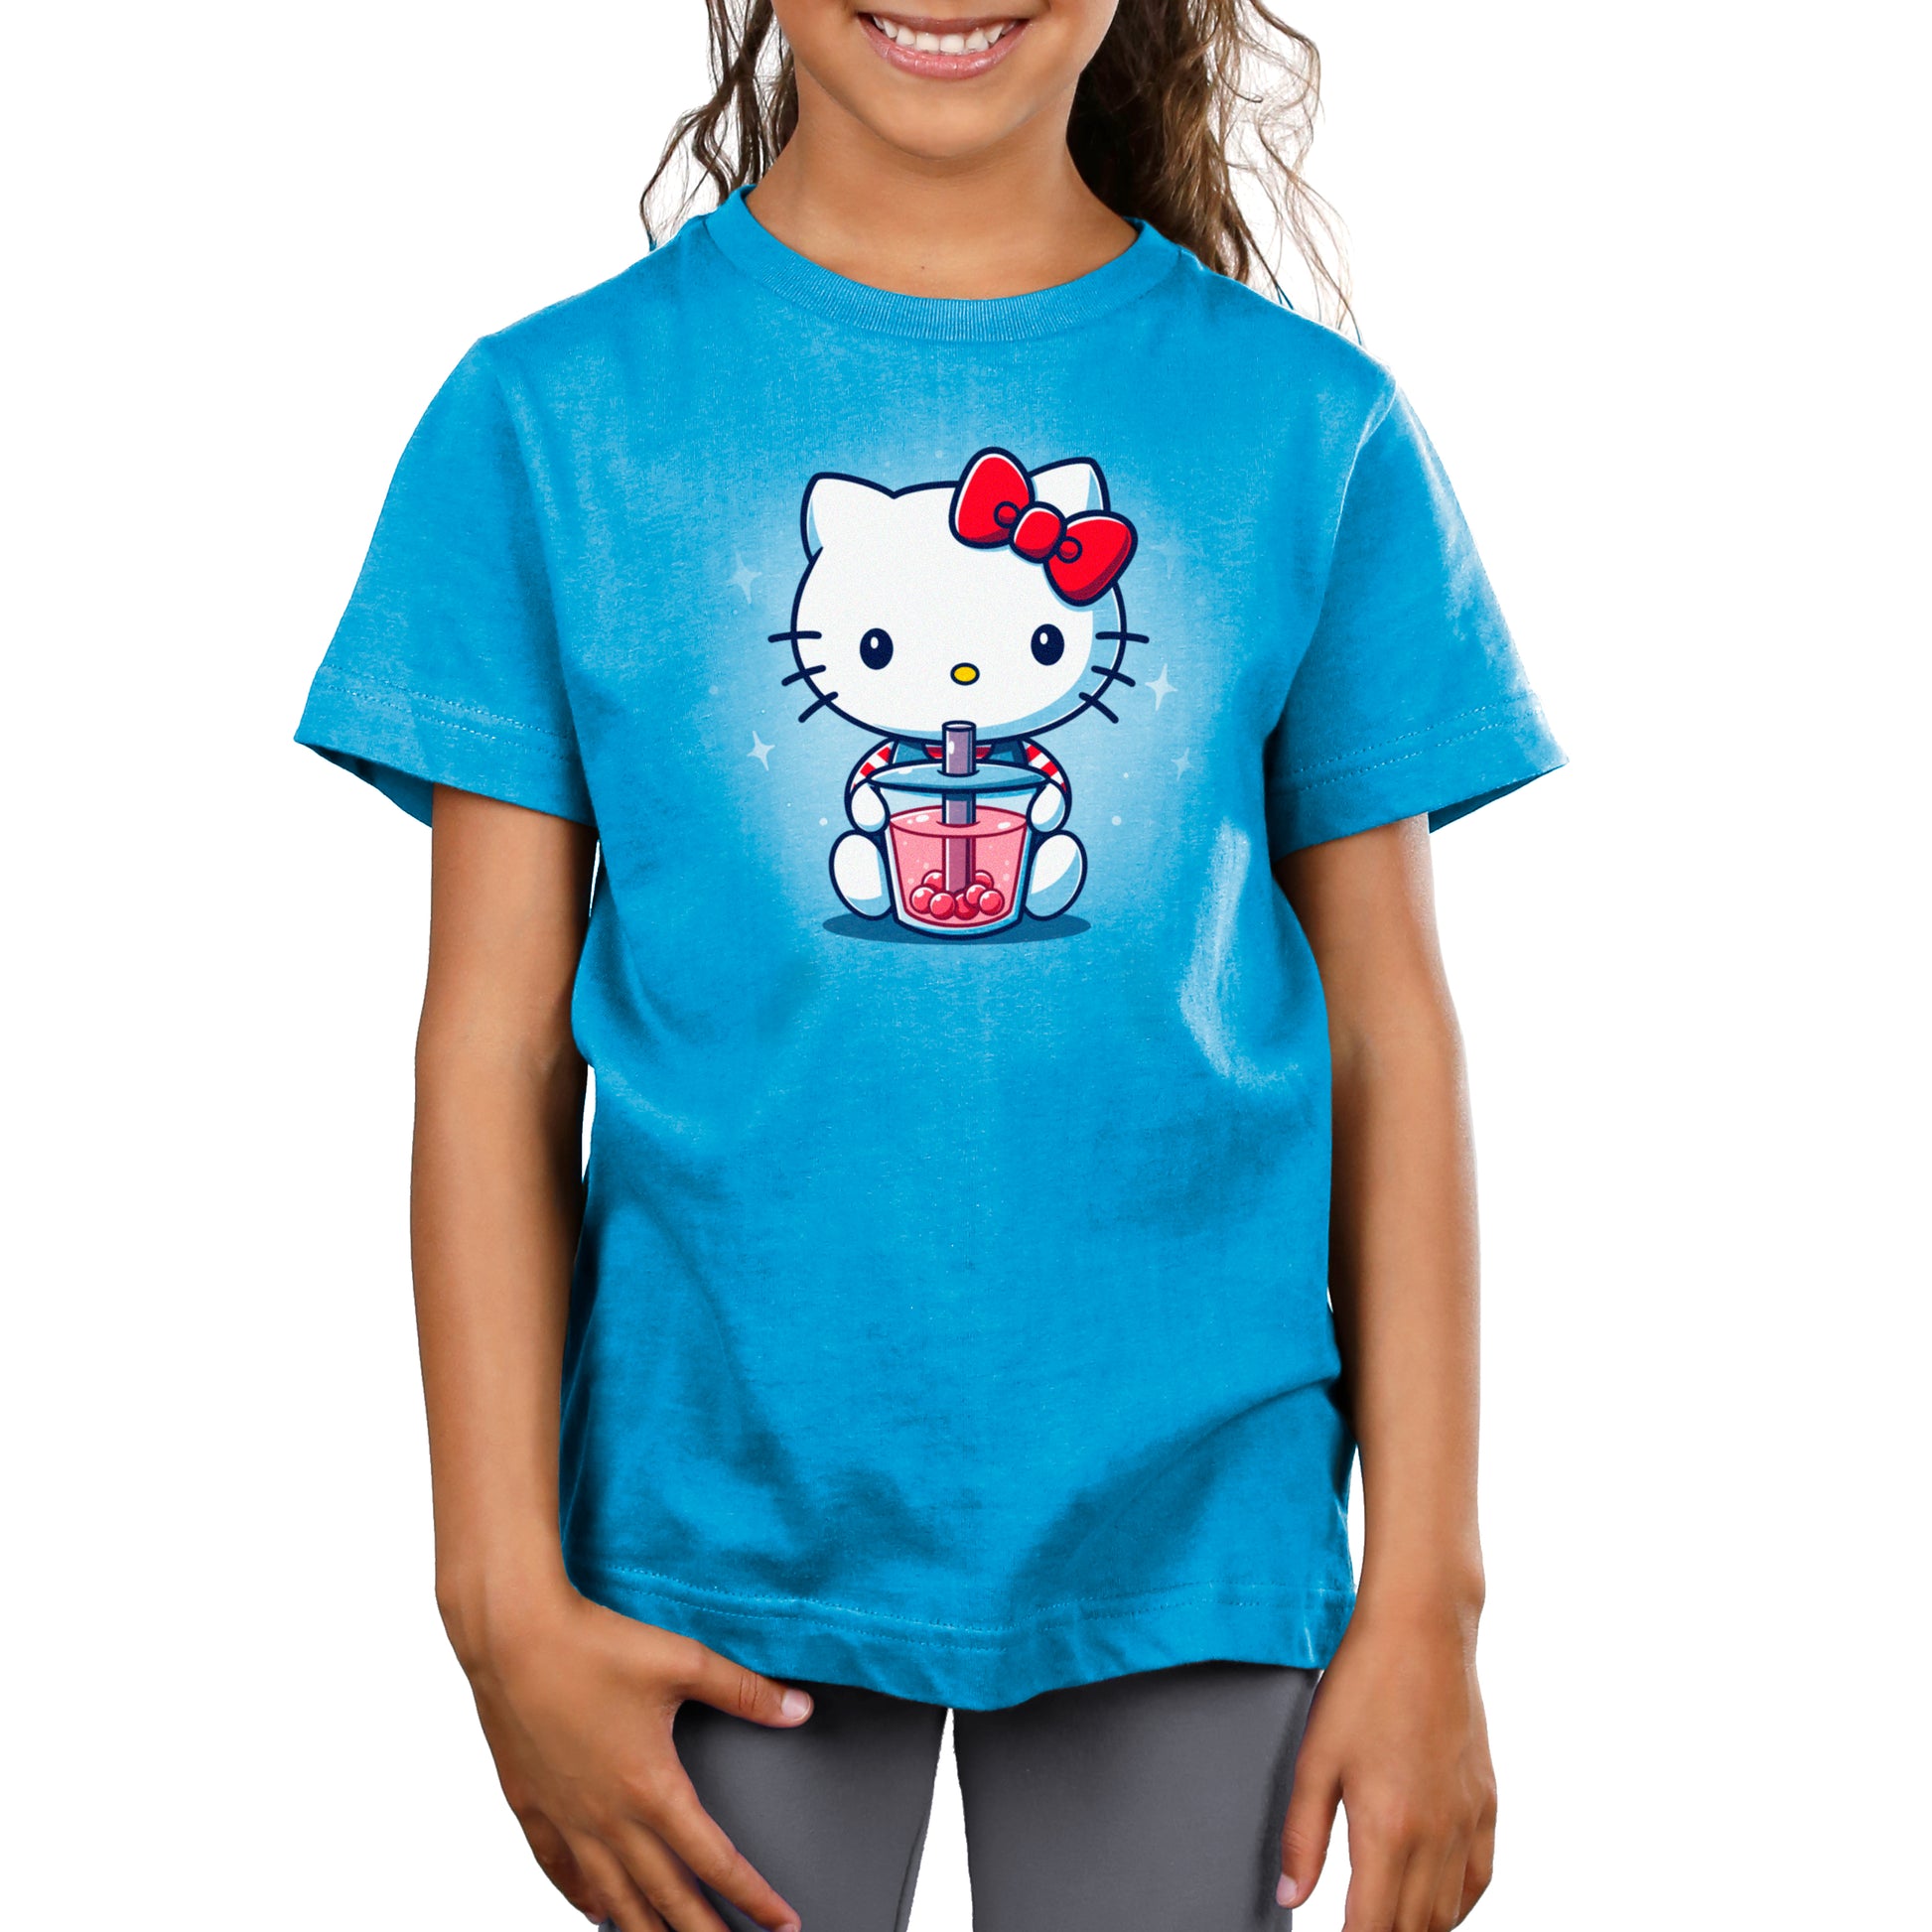 Officially licensed Sanrio Boba Hello Kitty kids t-shirt.